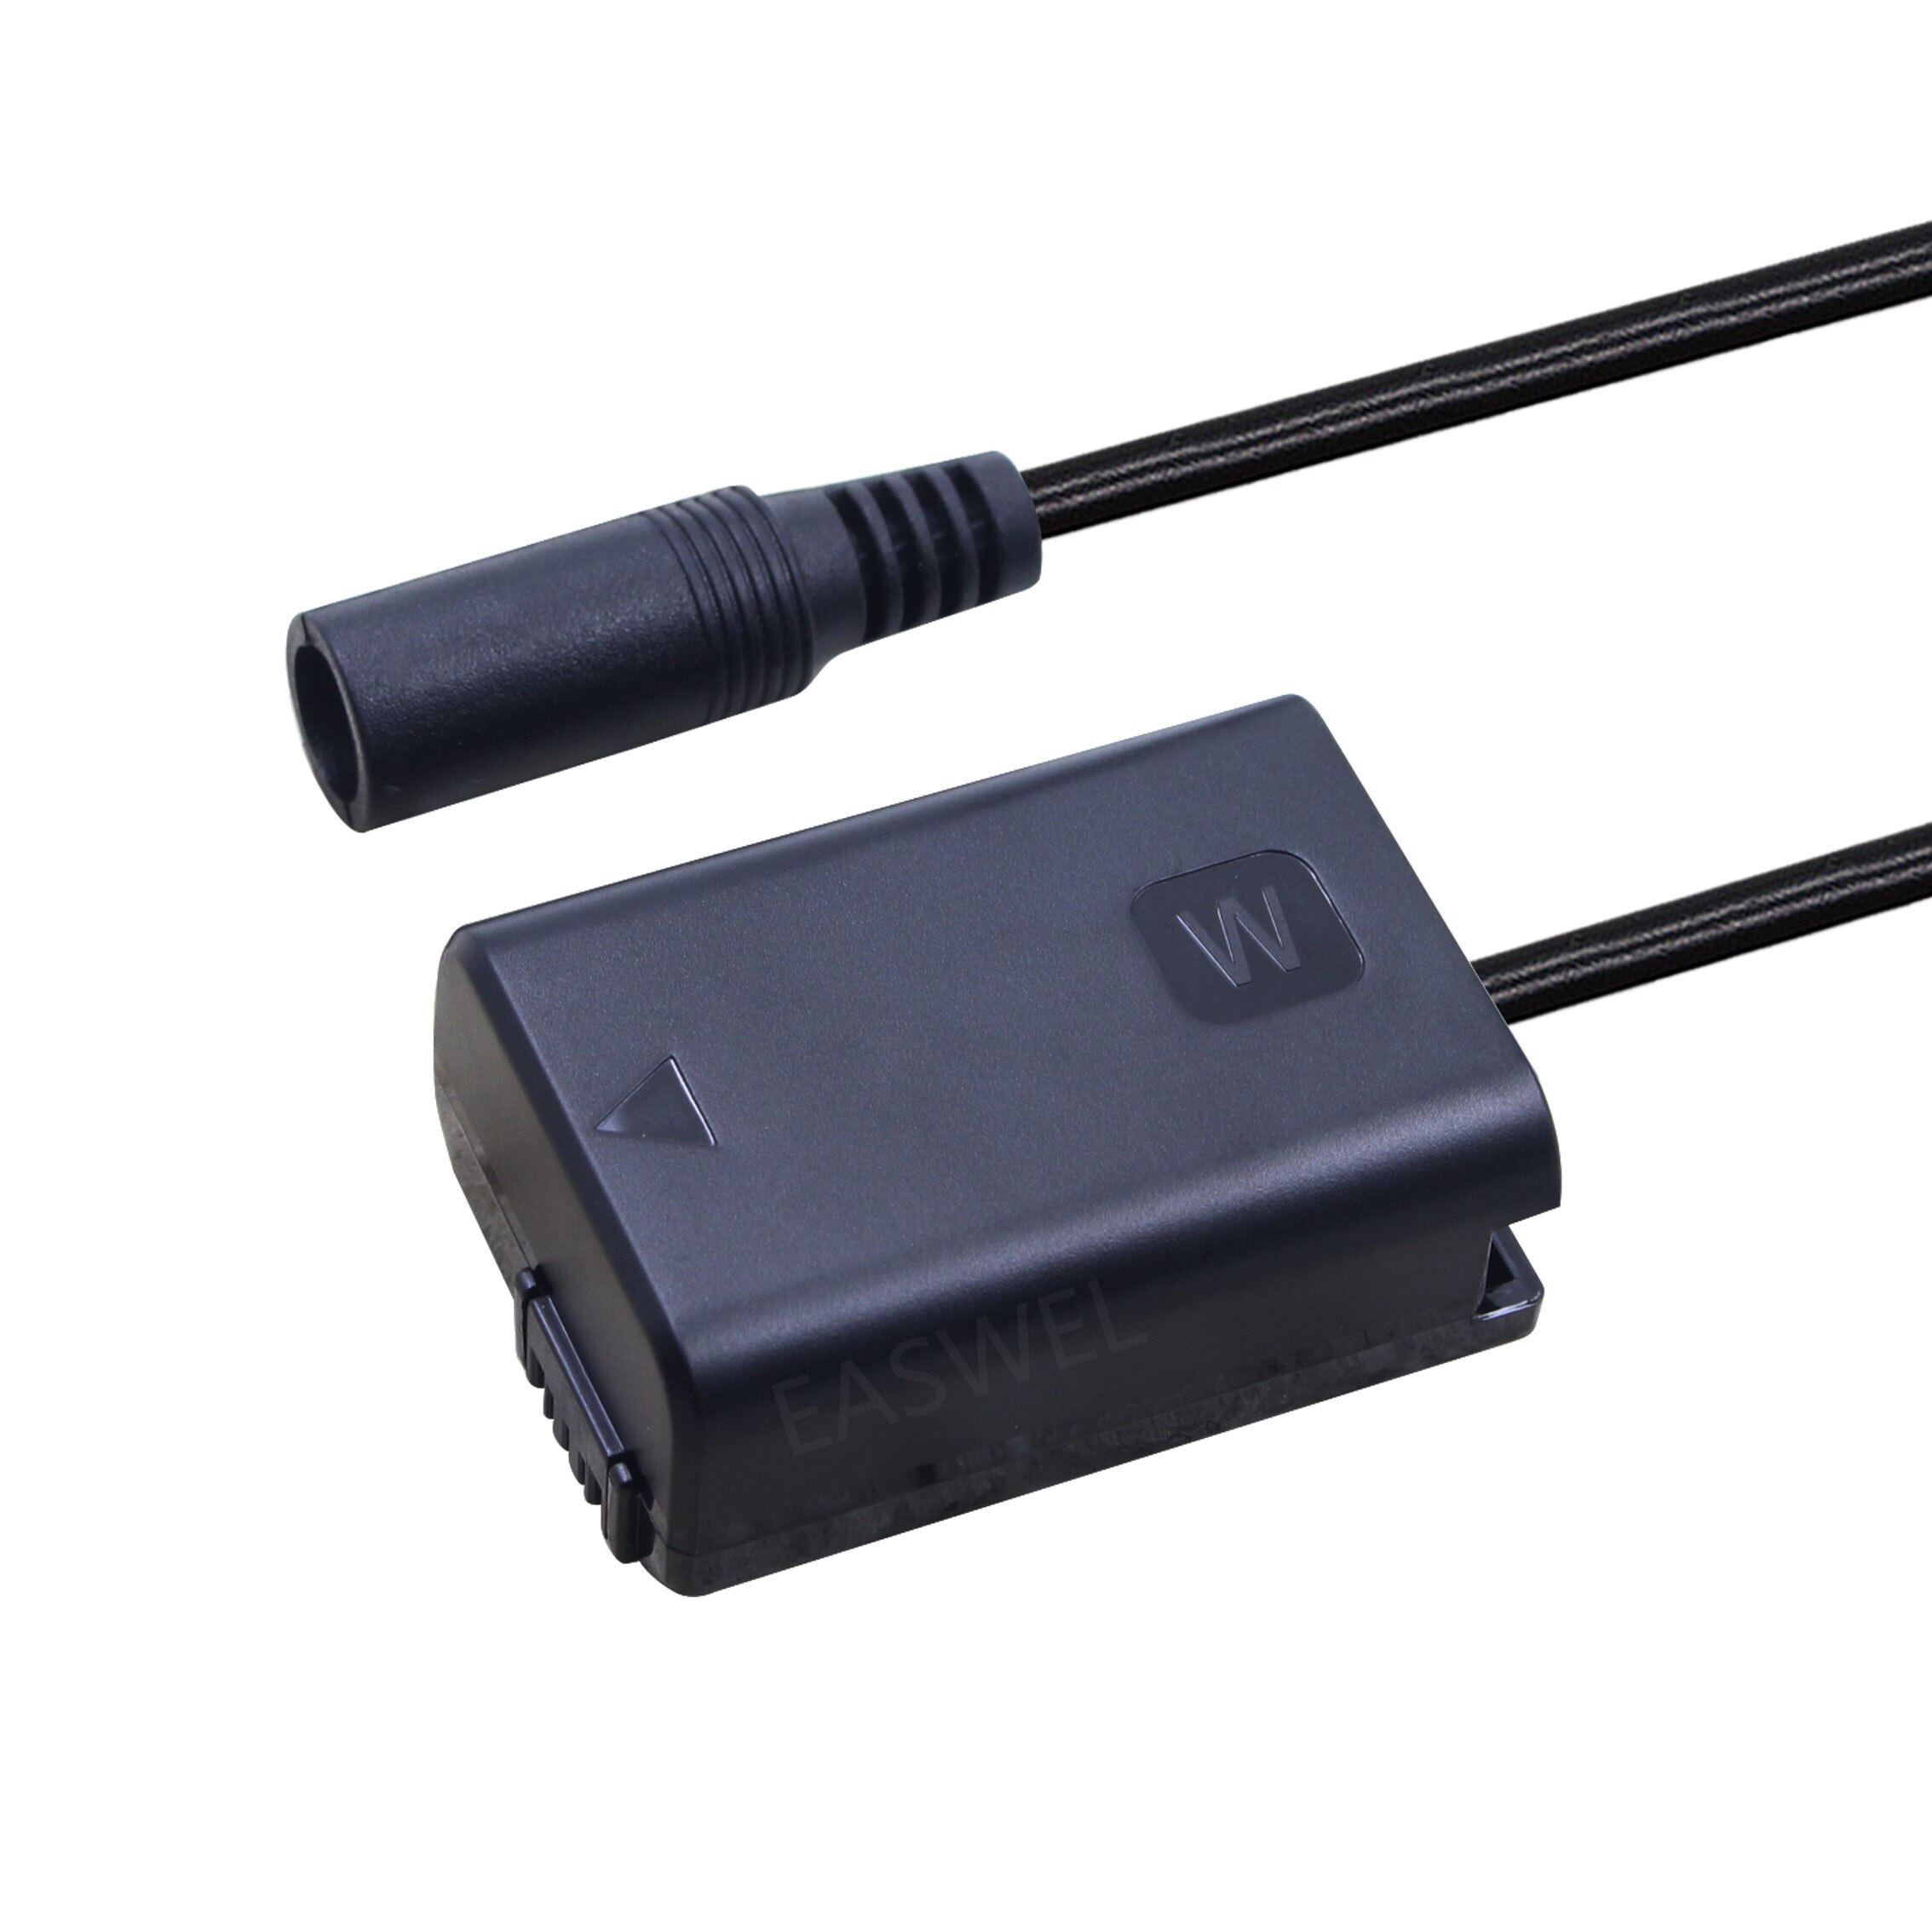 Power Adapter NP-FW50 Dummy Batterij Dc Power Bank Adapter Voeding Accessoires Voor AC-PW20 Sony